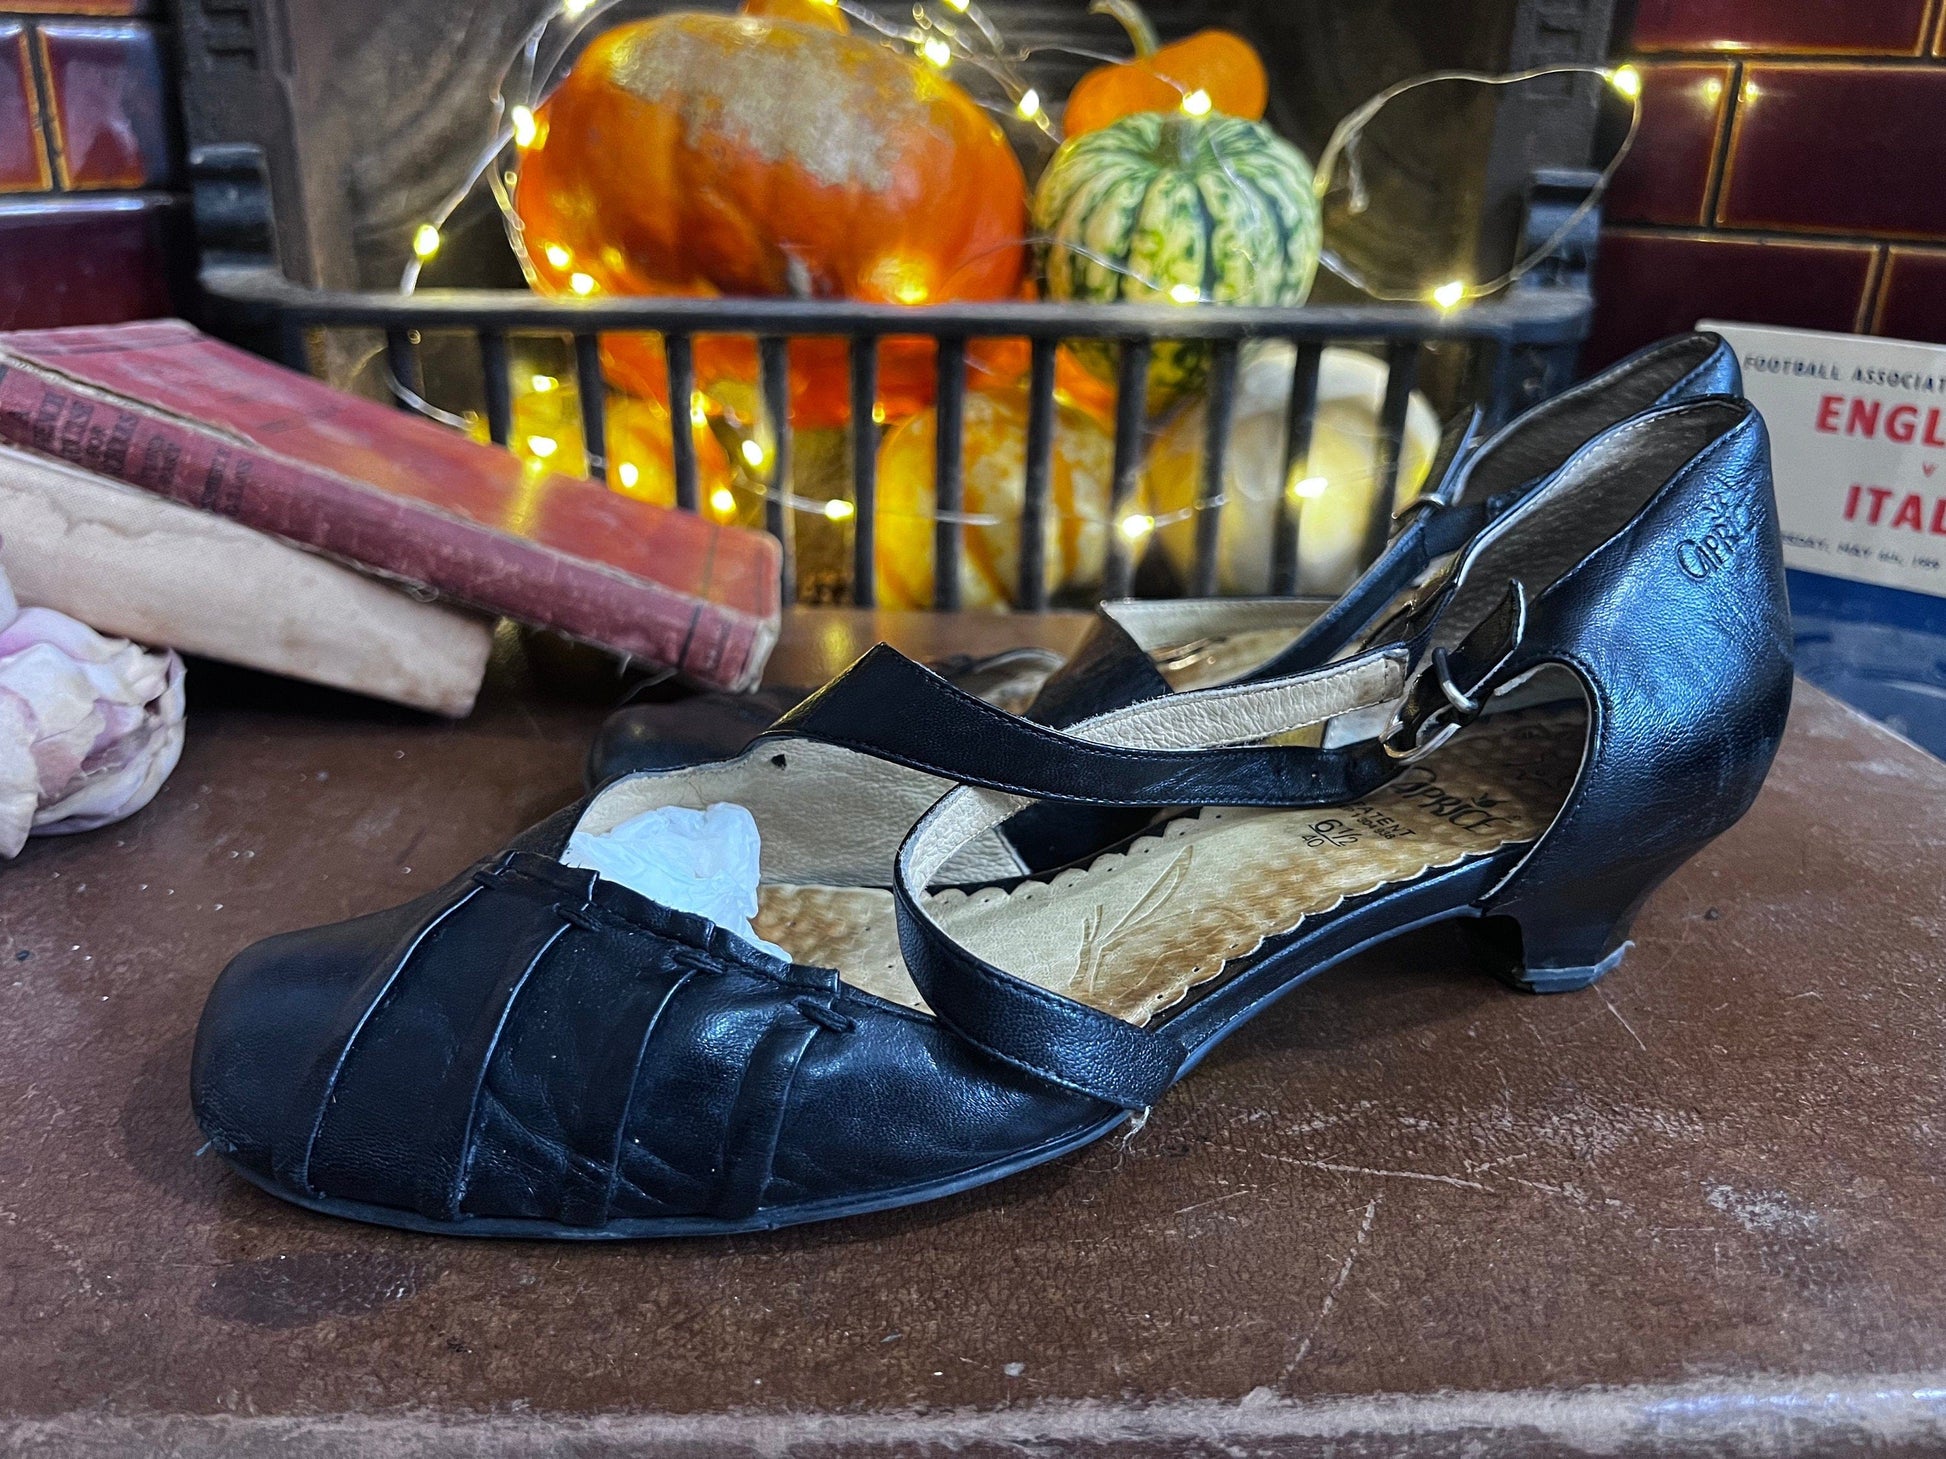 1970s Vintage Black Leather Shoes UK6.5 Vintage Mary Jane - Vintage Black Leather Shoes, 1970s synthetic sole low heel black Vintage shoes